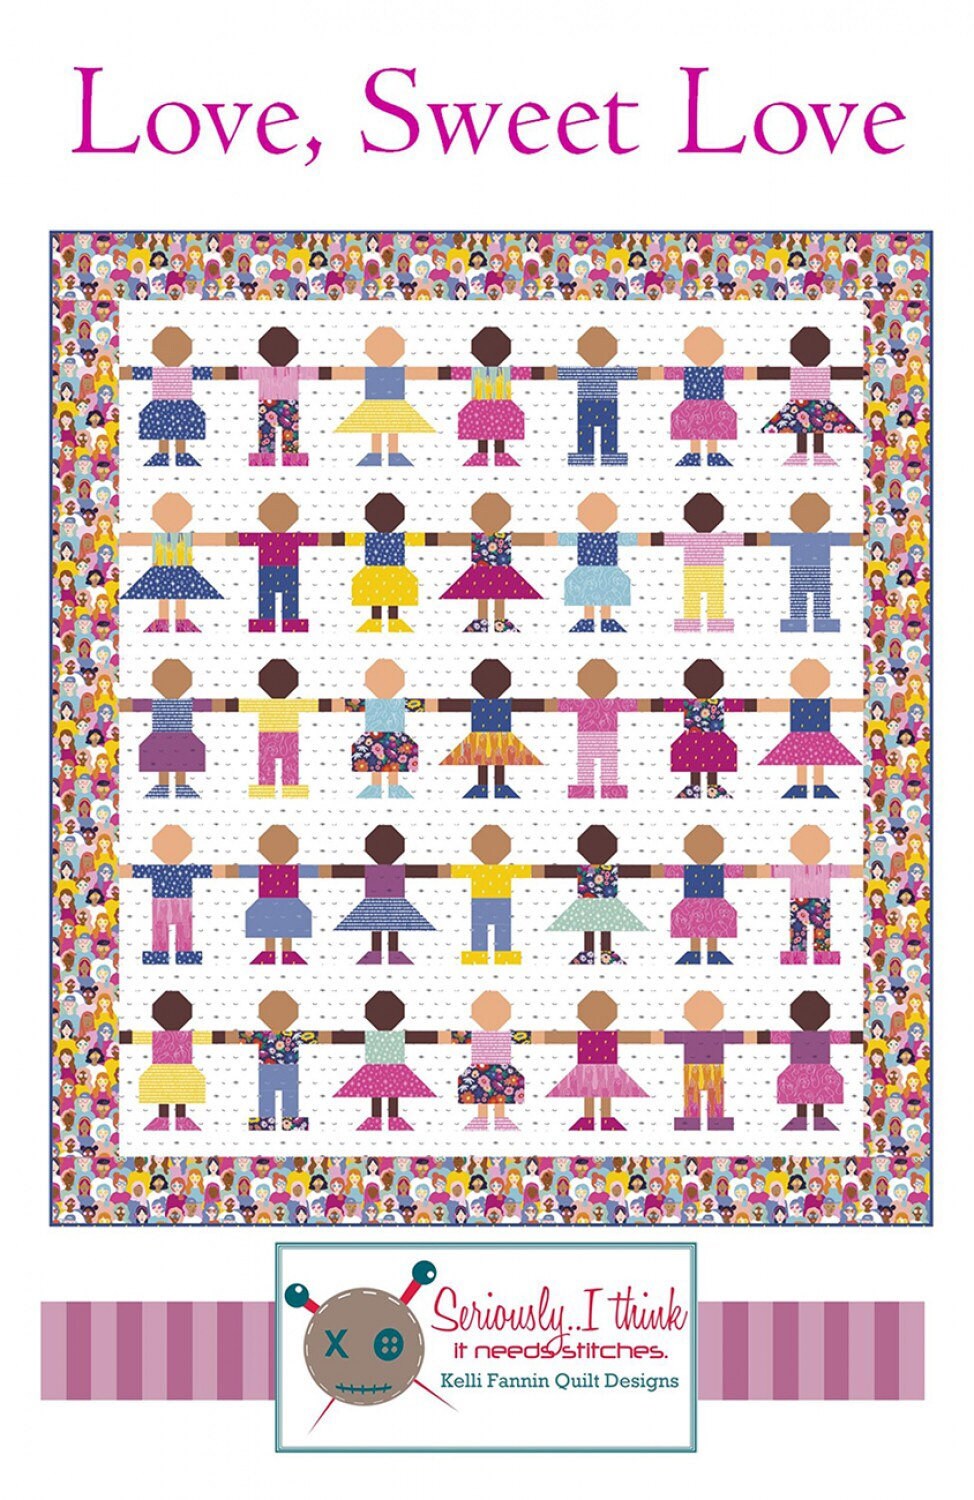 Love Sweet Love Quilt Pattern - Kelli Fannin Quilt Designs